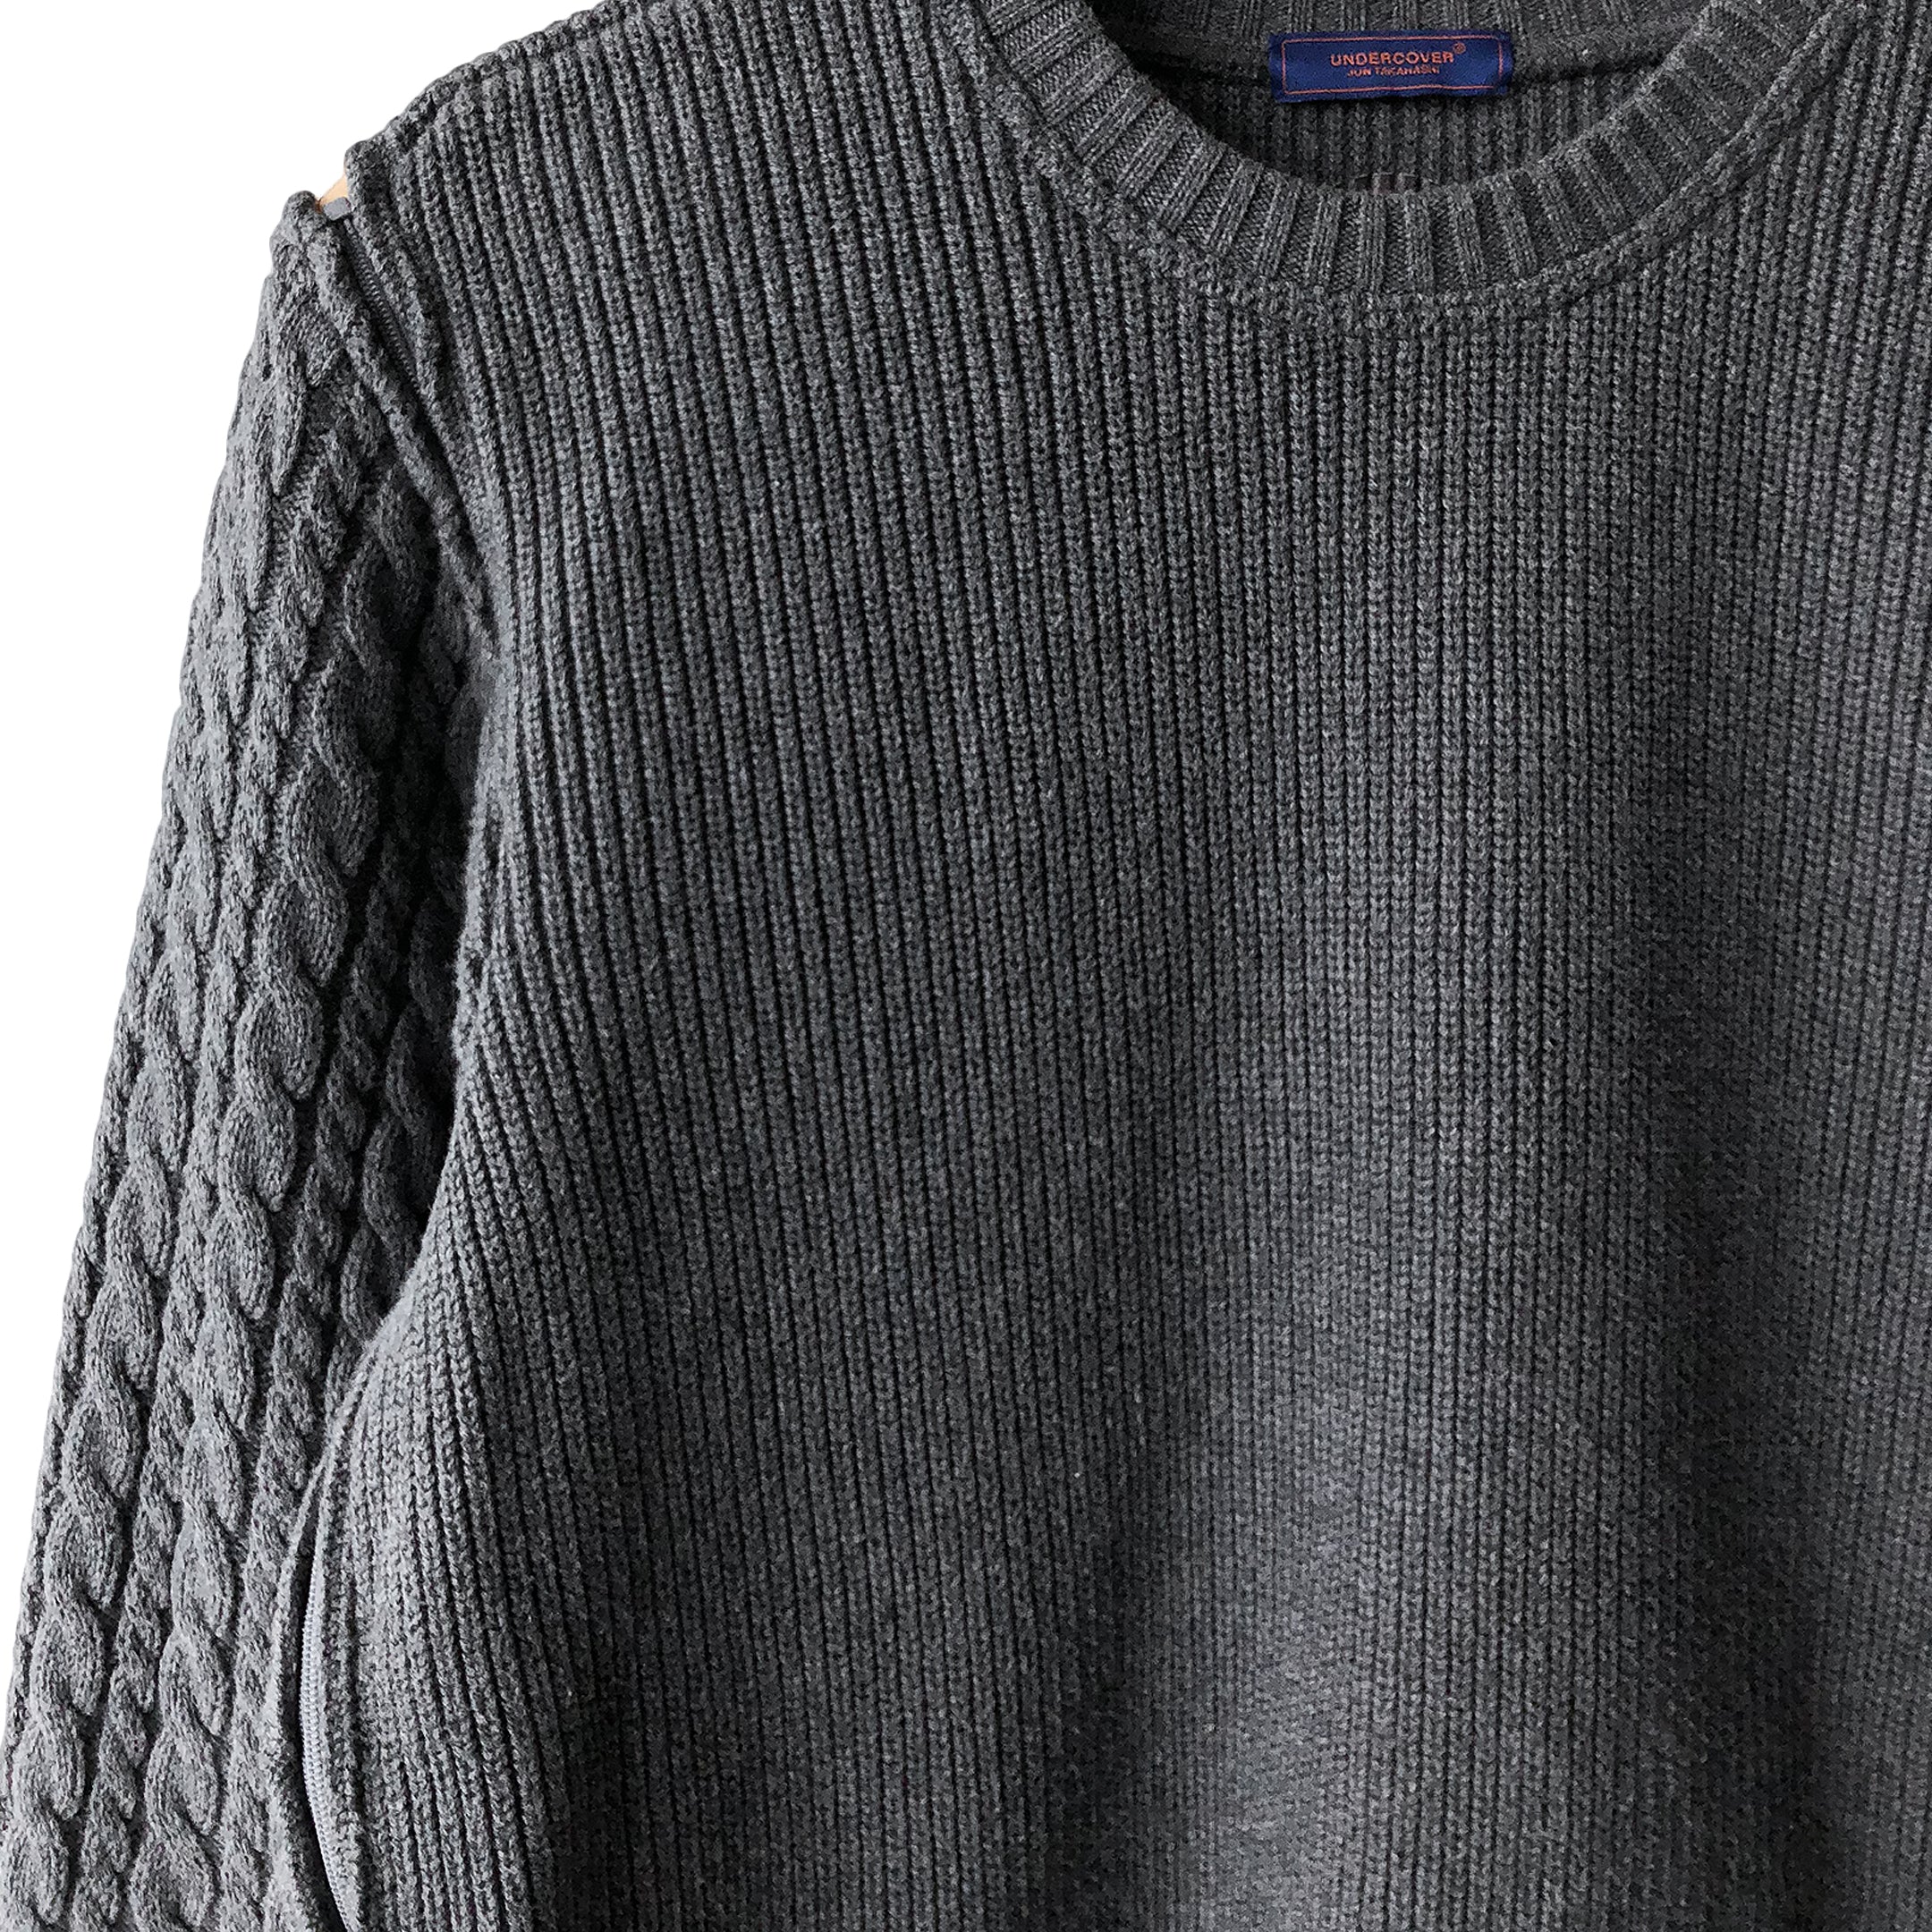 Undercover Crewneck Sweater - SS16 